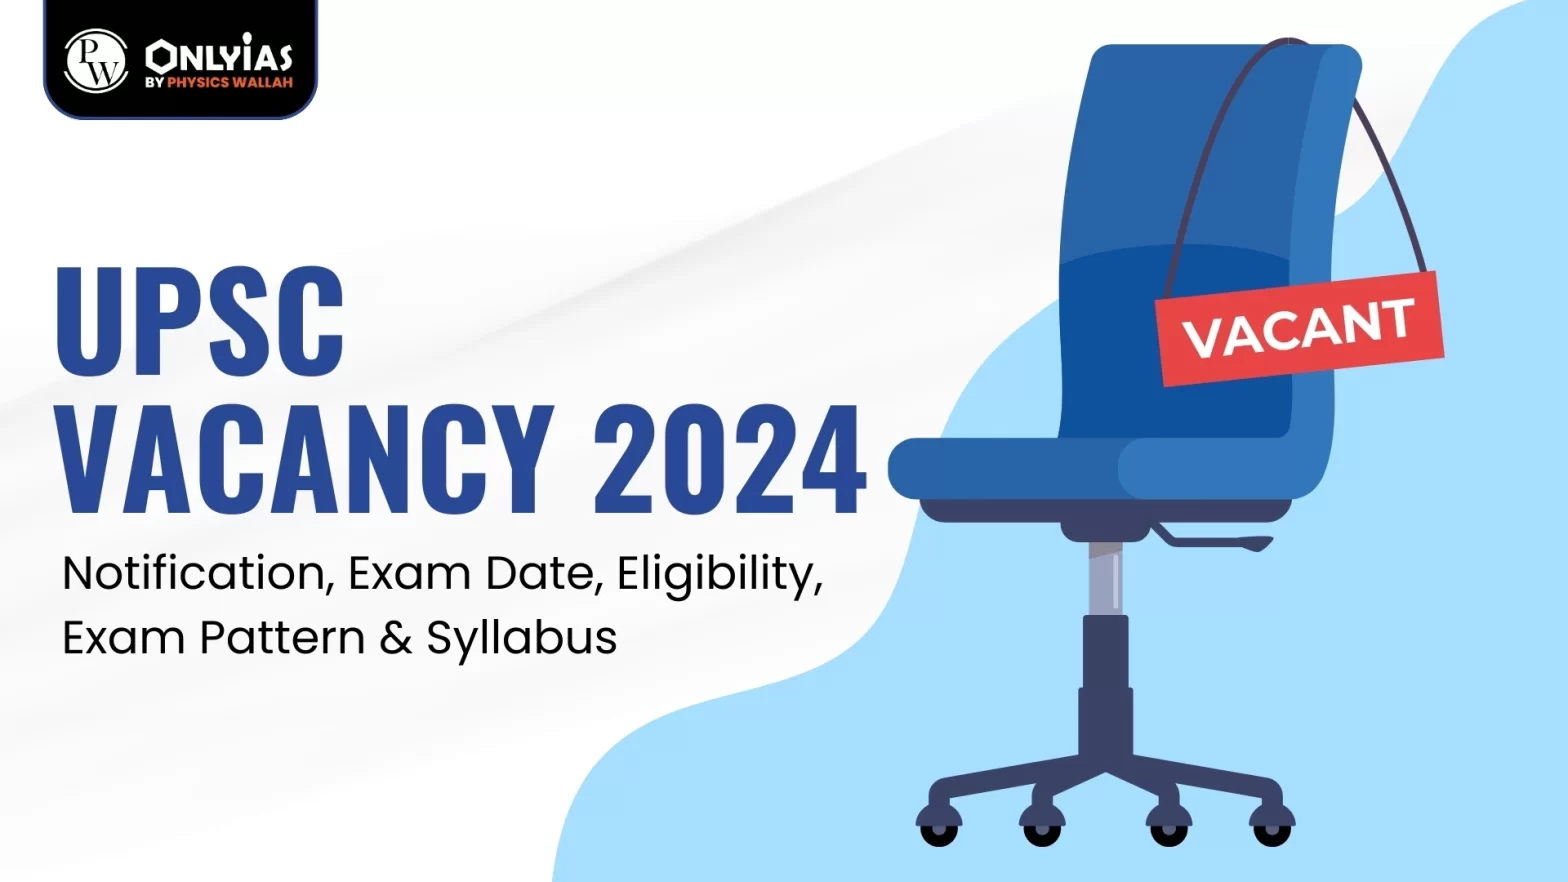 UPSC Vacancy 2024: Notification, Exam Date, Eligibility, Exam Pattern & Syllabus